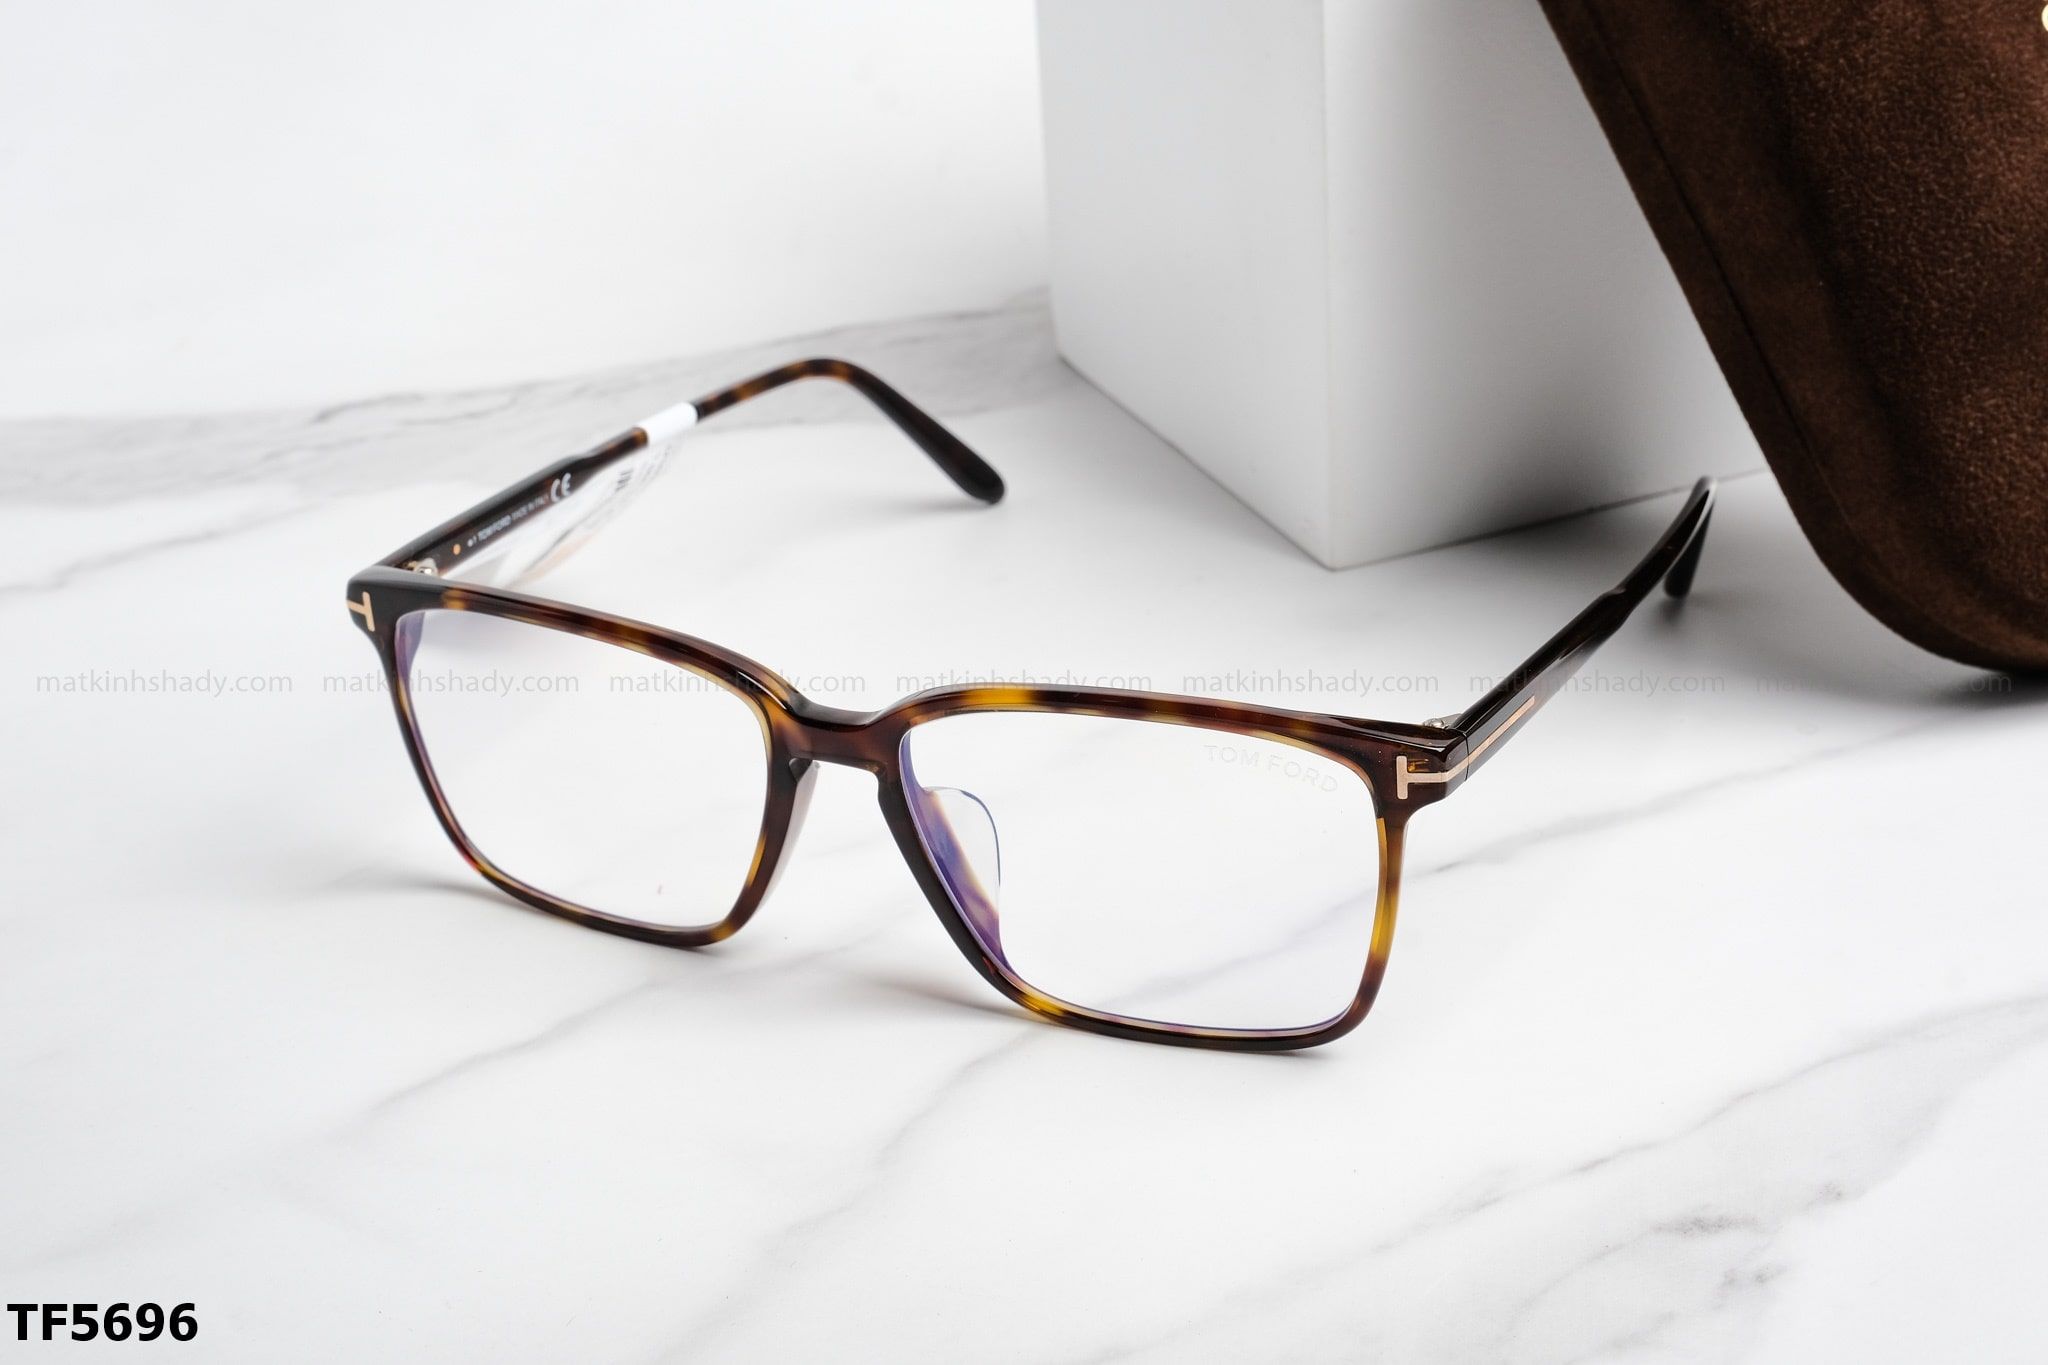  Tom Ford Eyewear - Glasses - TF5696 